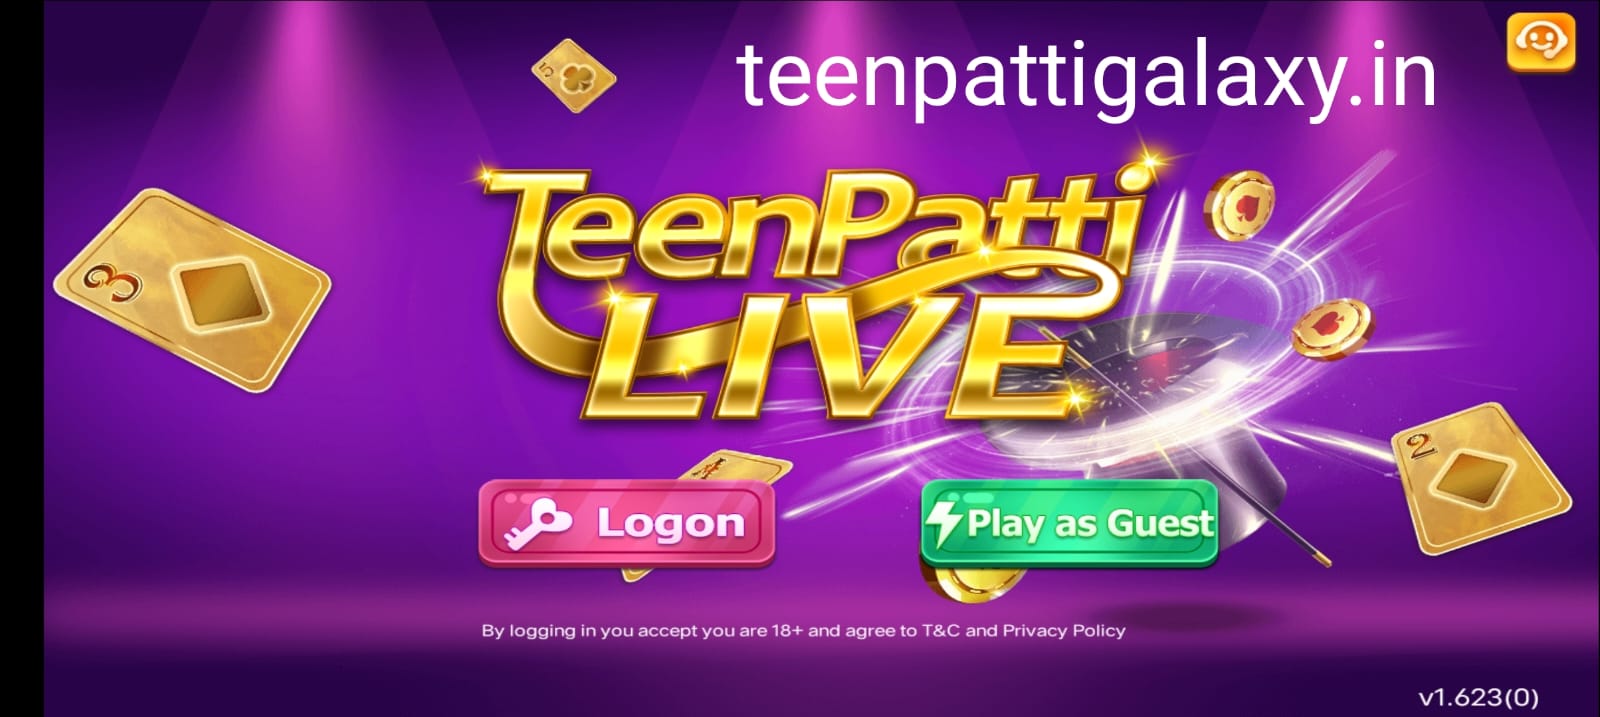 Login Process In Teen Patti Live App